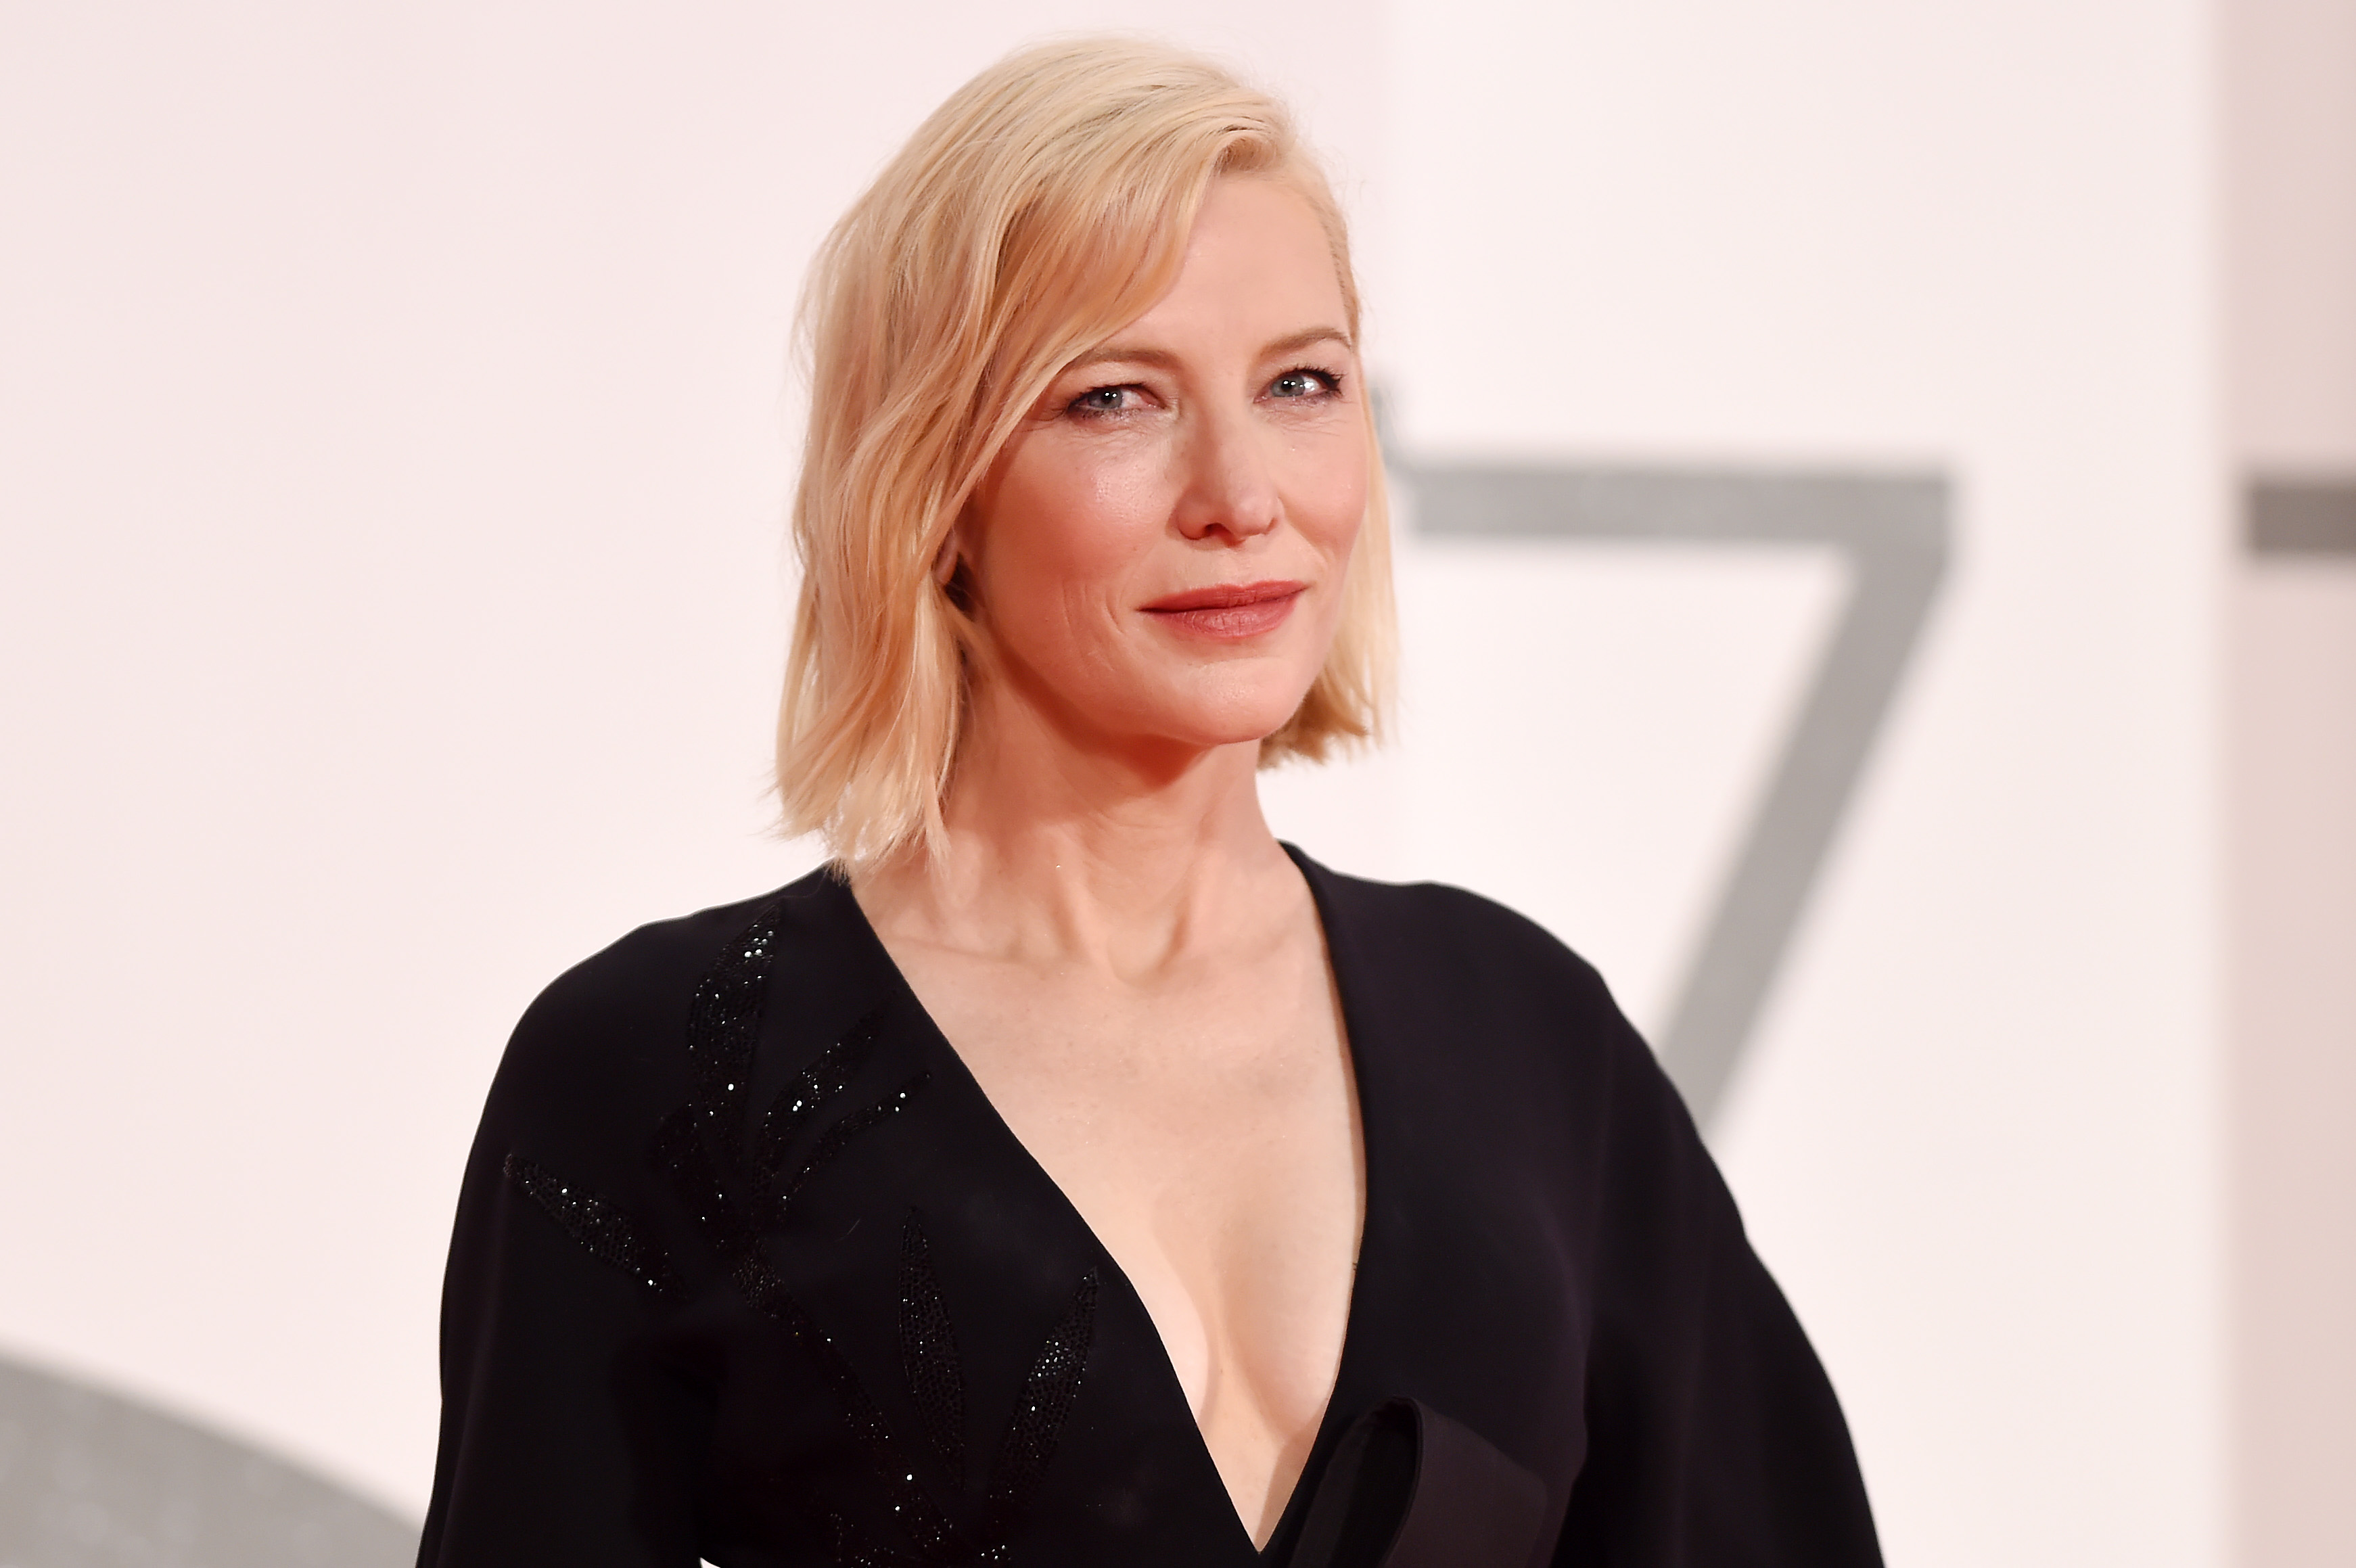 Cate Blanchett, in a black dress, at the Venice Film Festival in 2020.